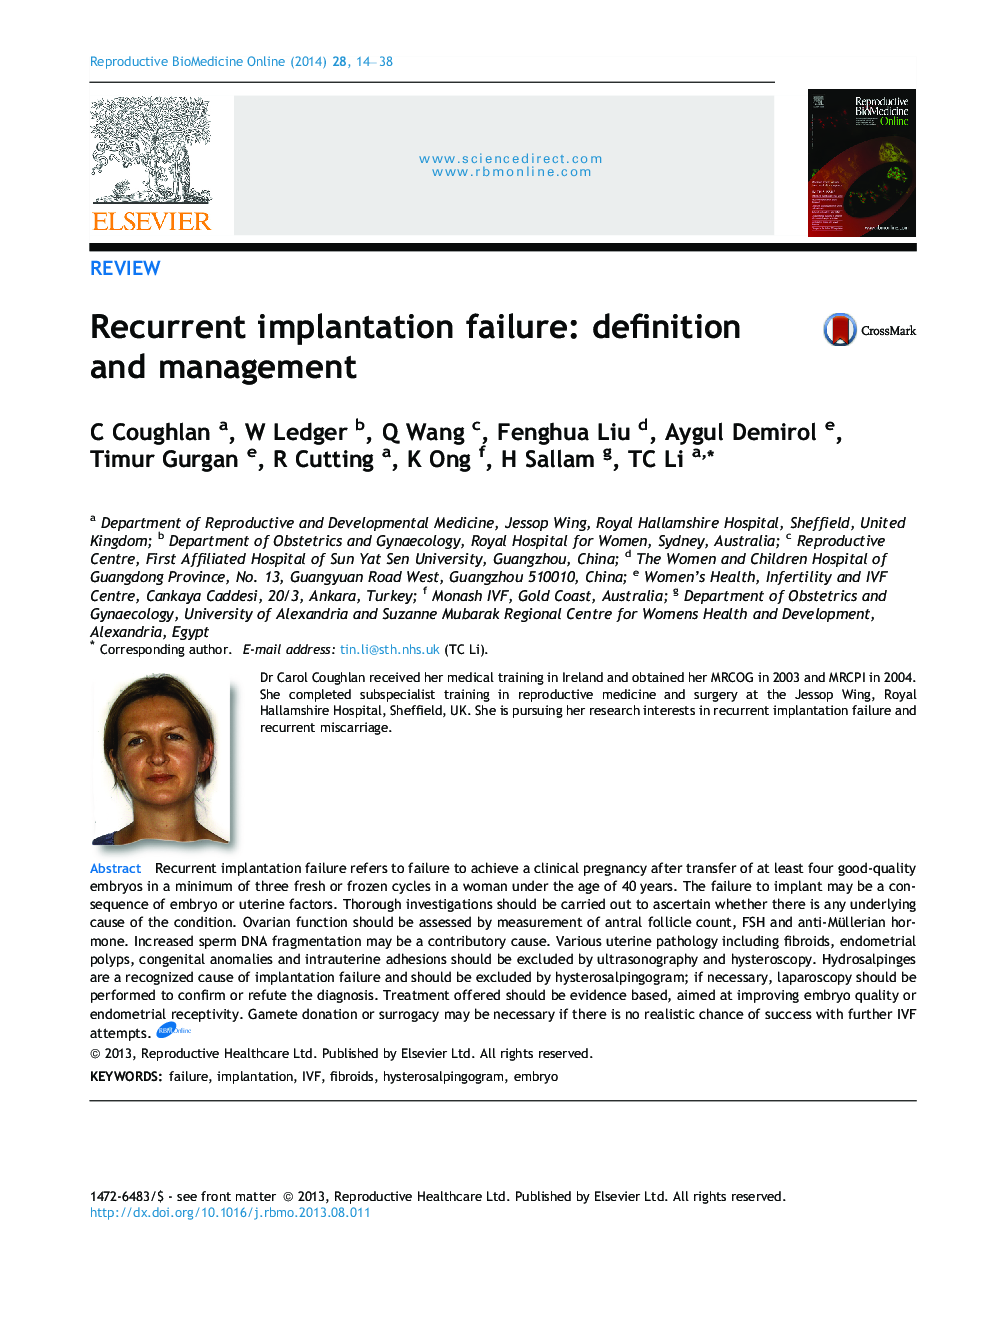 Recurrent implantation failure: definition and management 